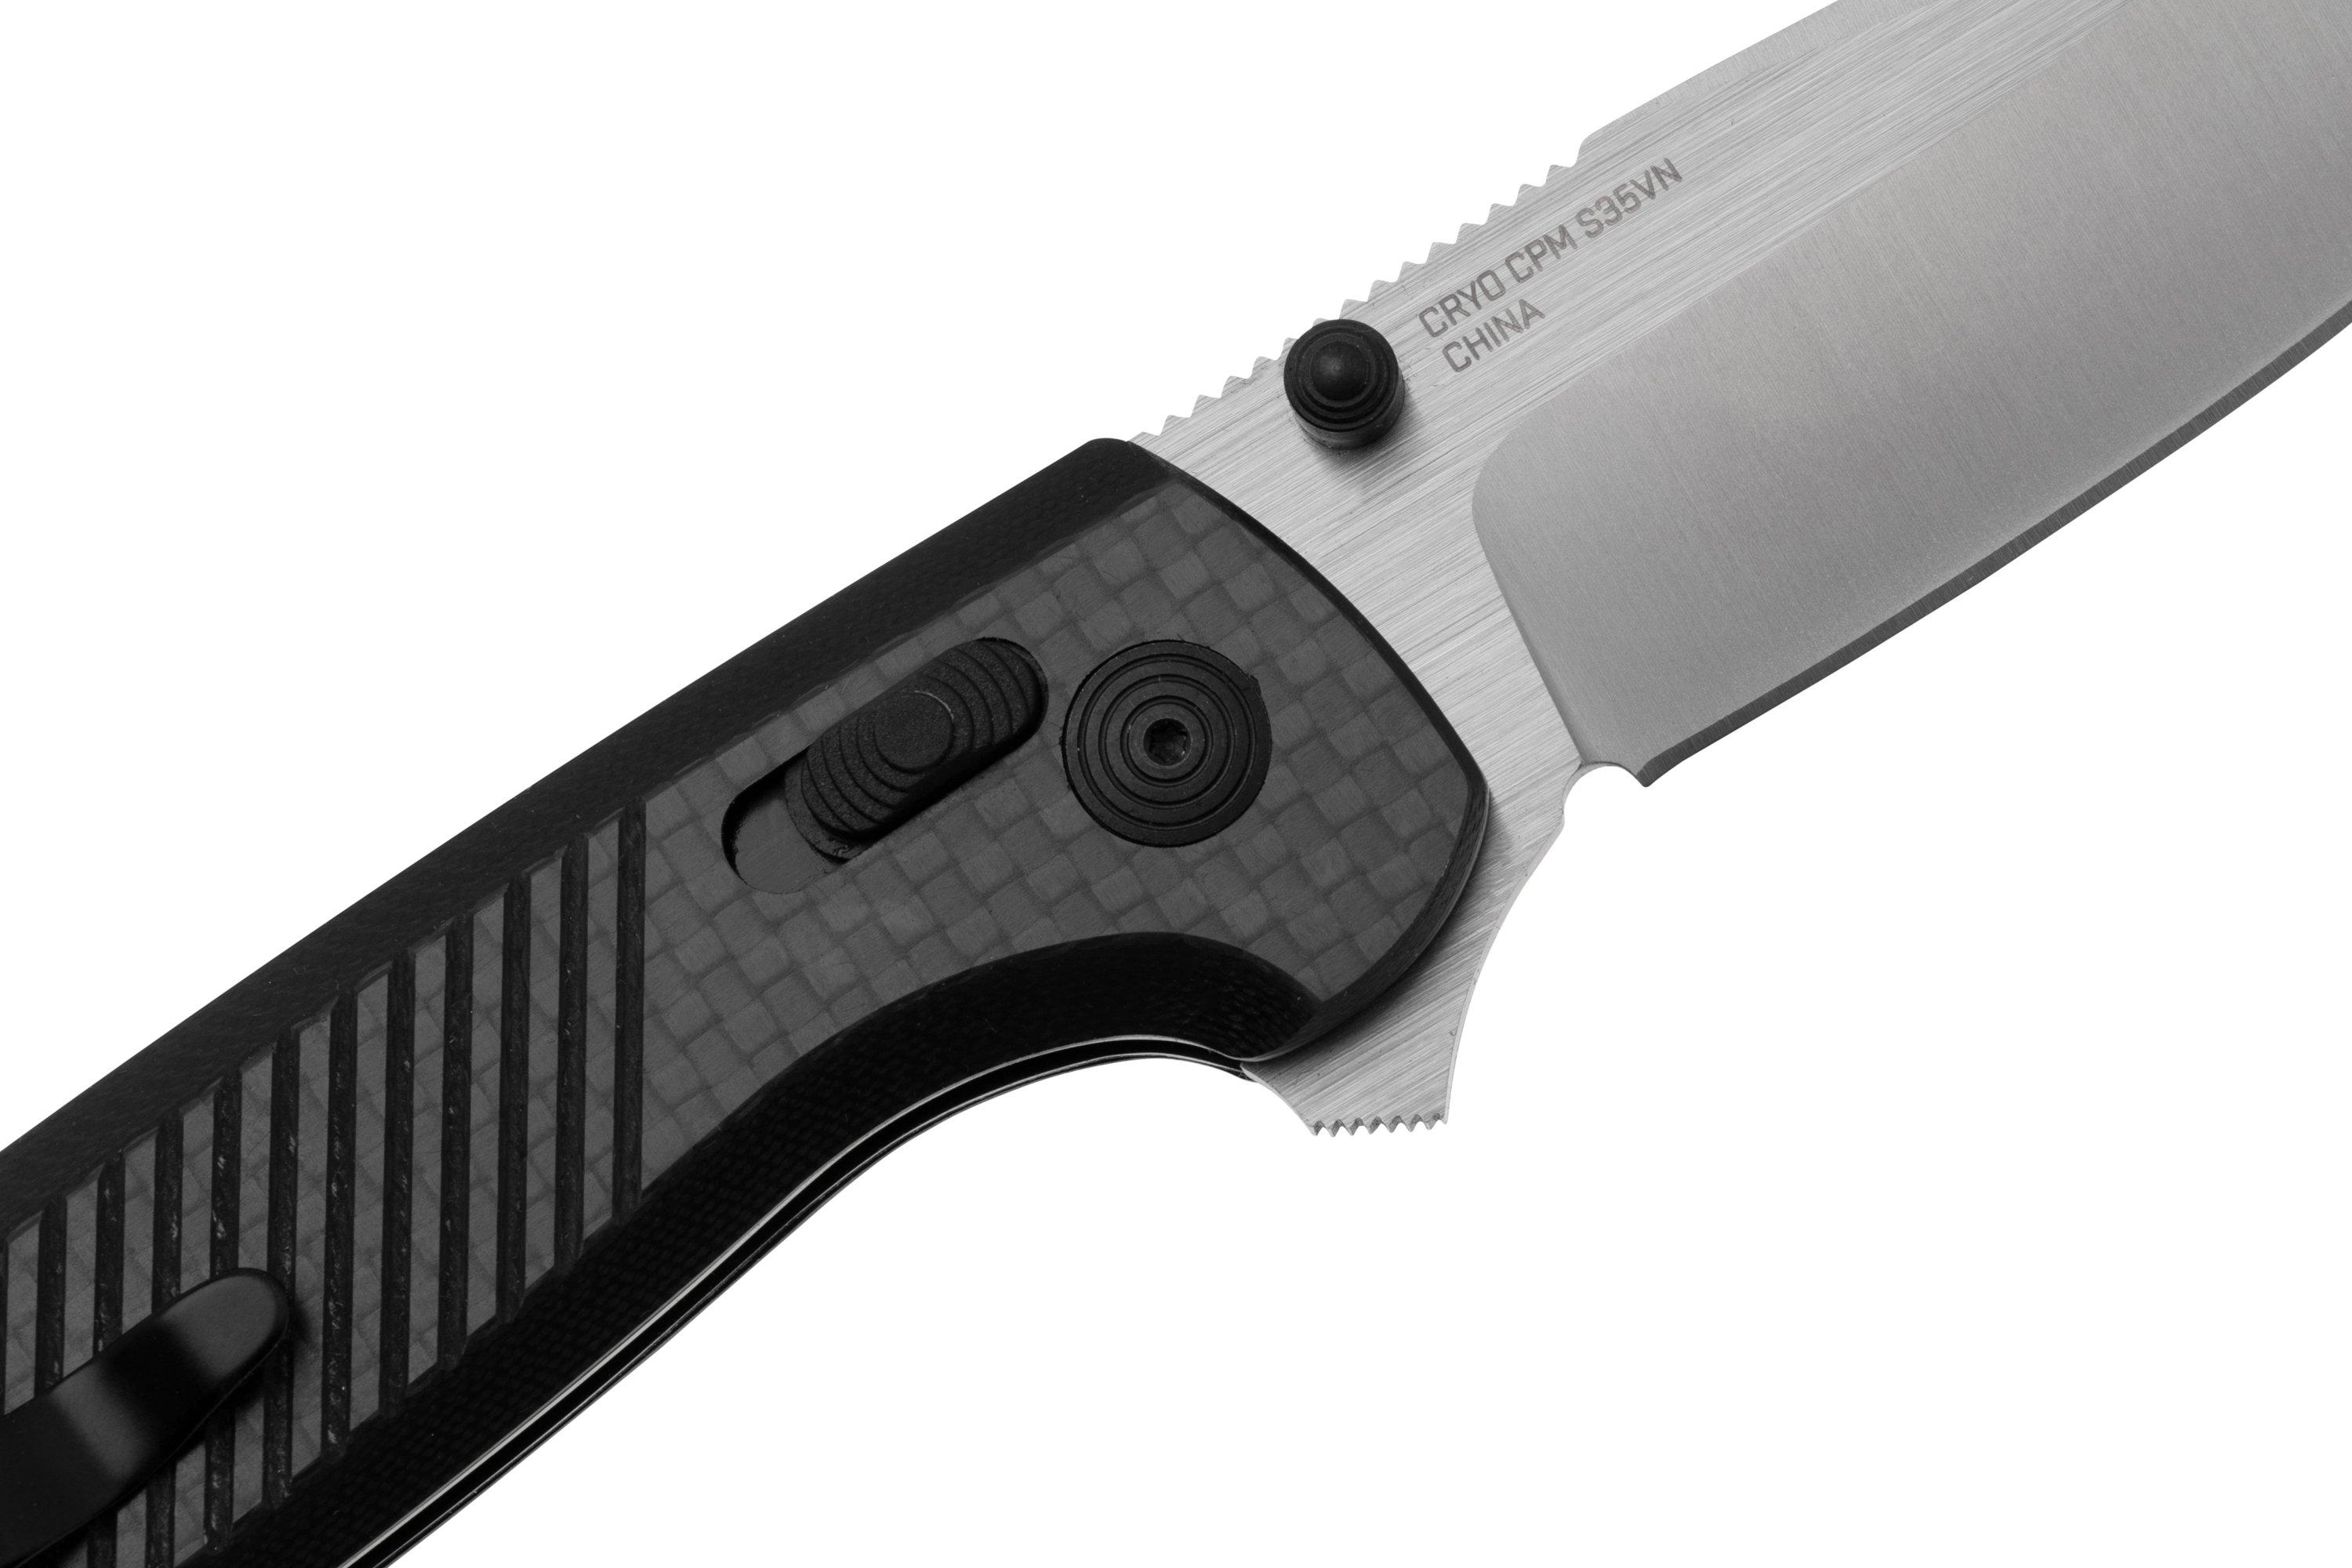 SOG Terminus XR CPM S35VN Carbon fibre G10, TM1025 pocket knife 